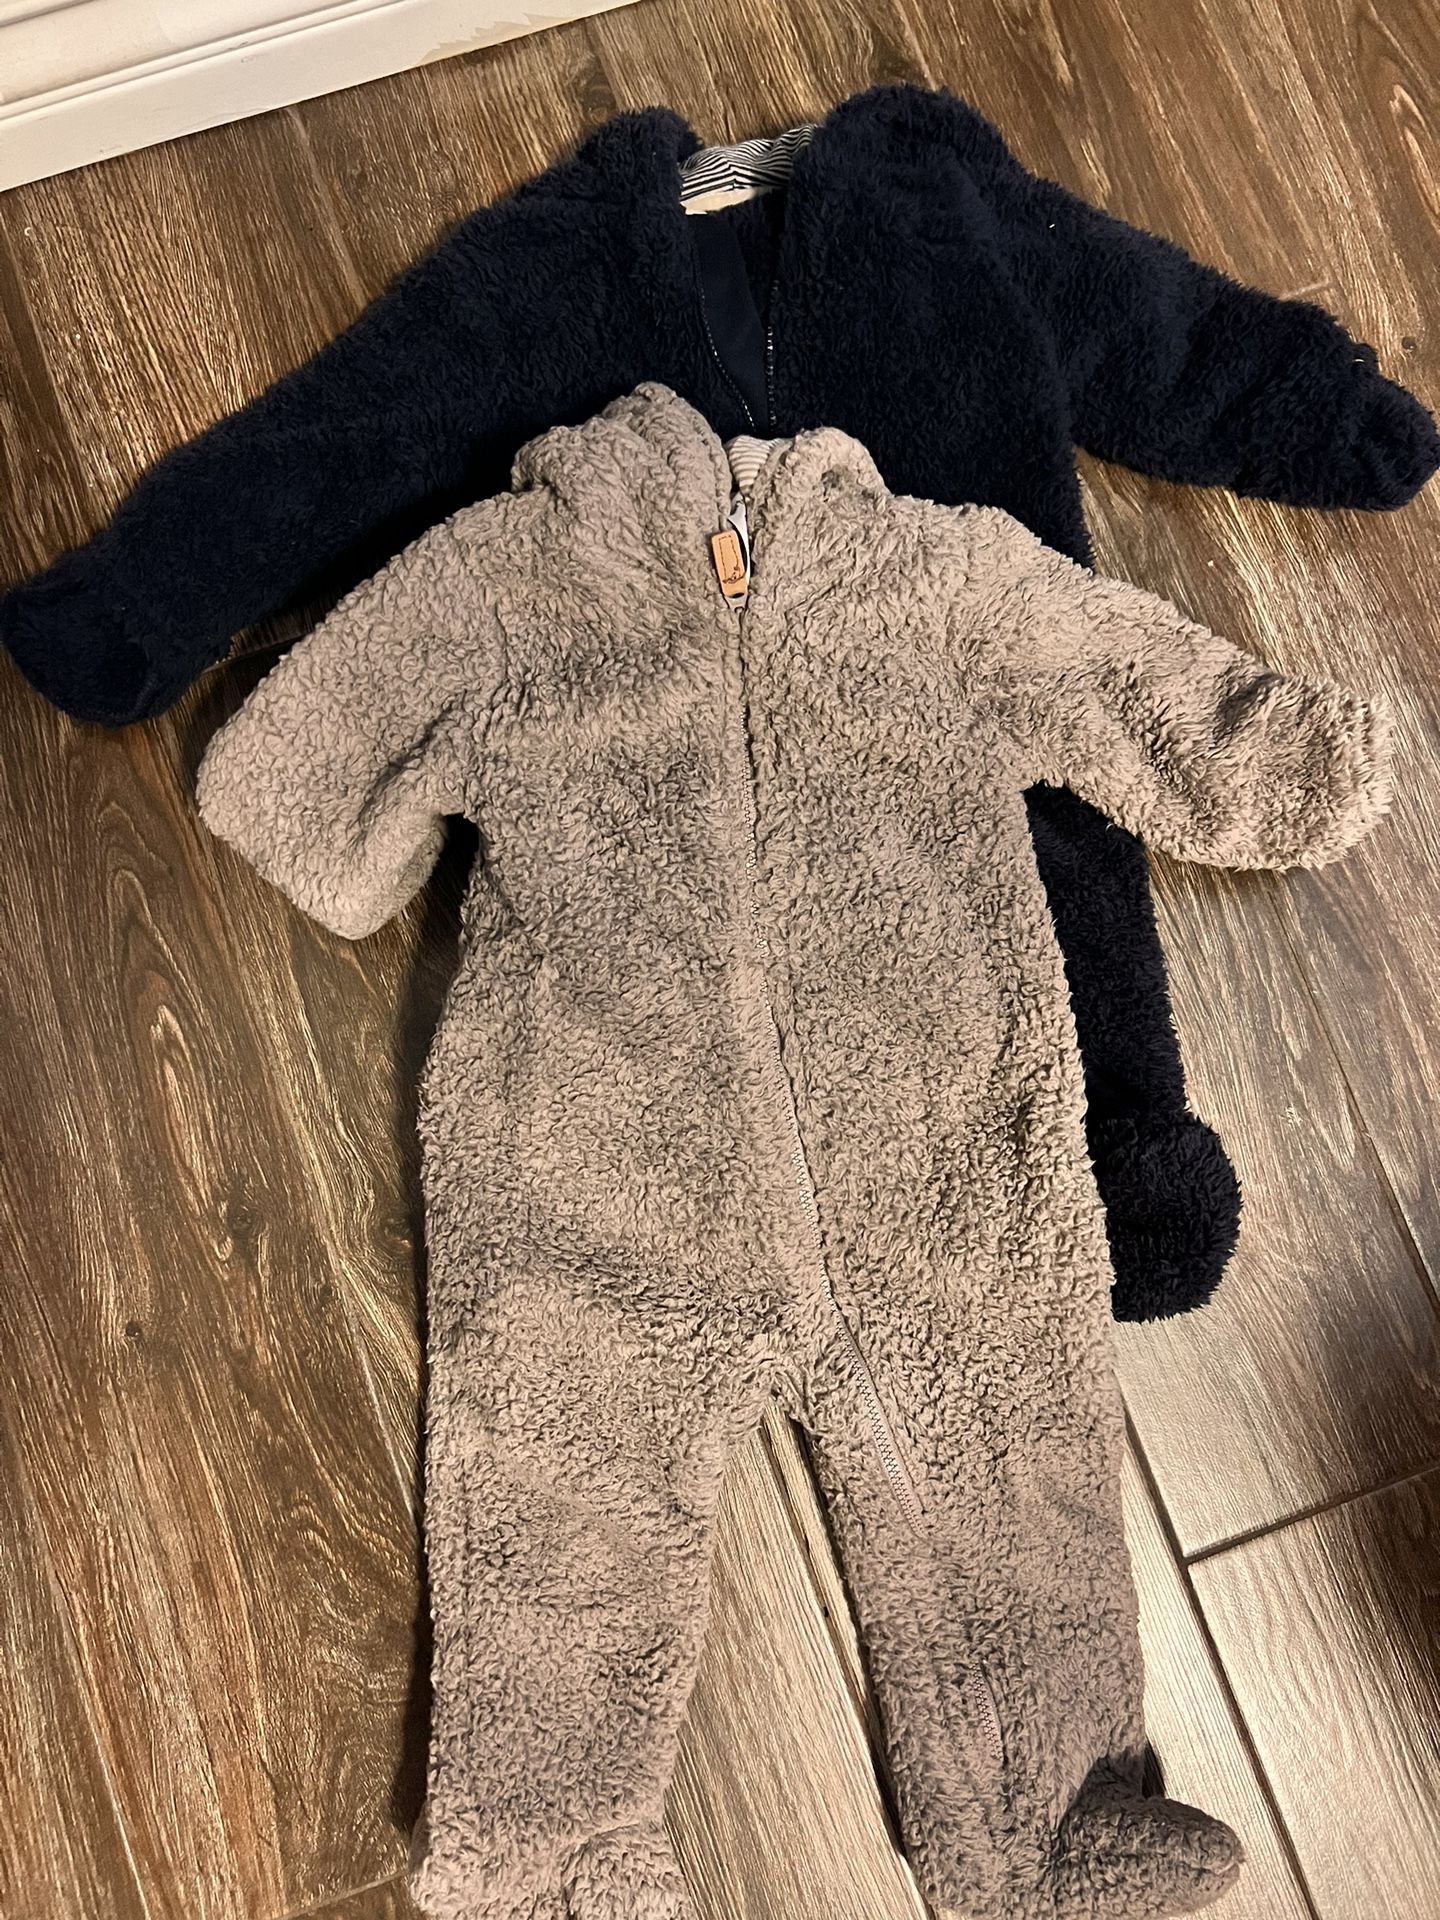 Baby Clothes Size 12 Mo